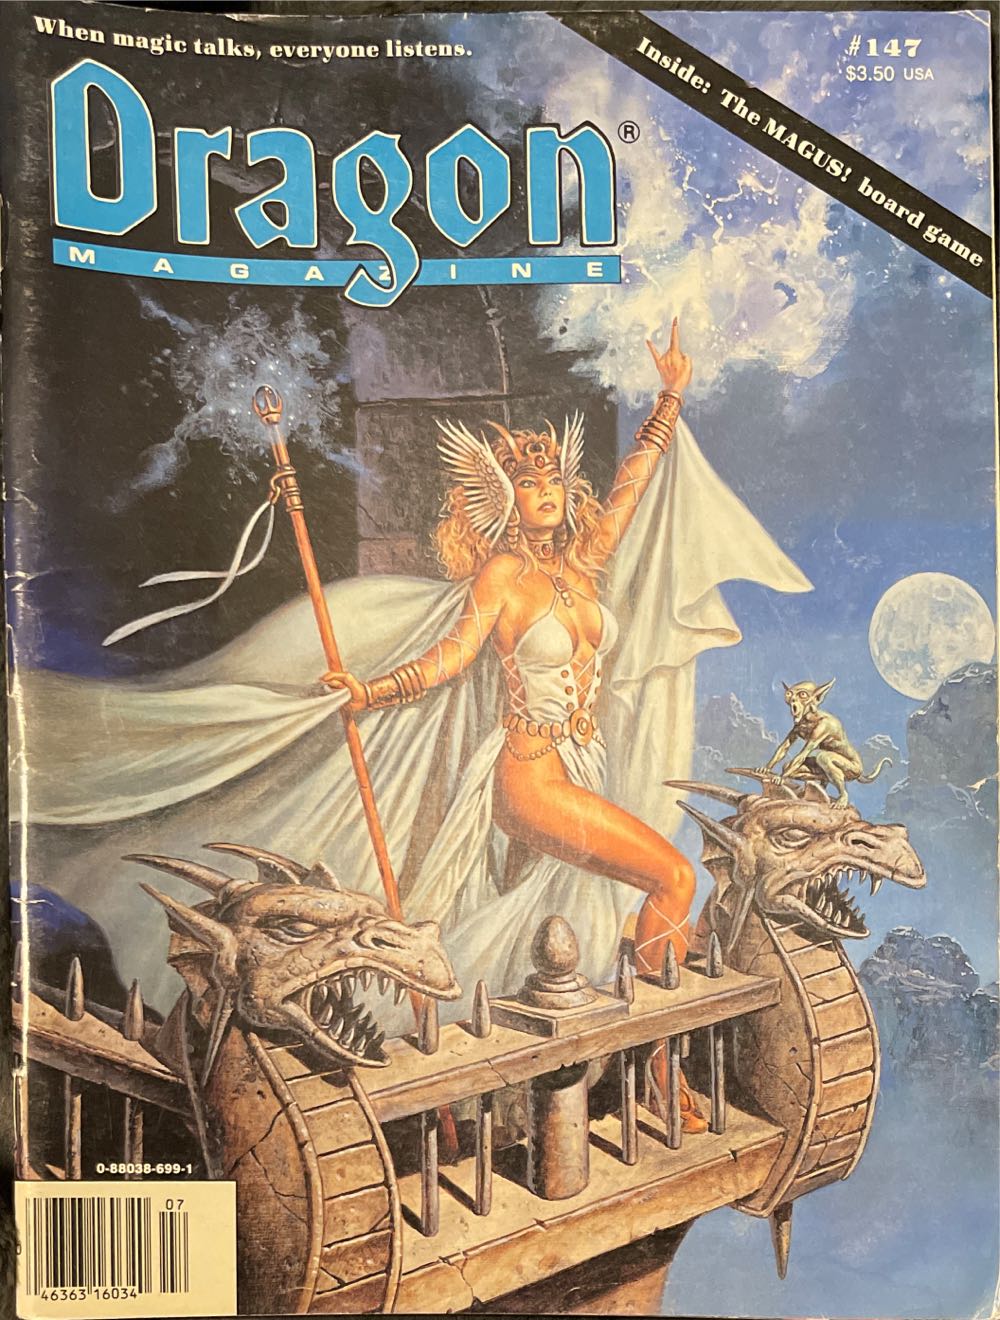 Dragon  (July) magazine collectible [Barcode 04636316034007] - Main Image 1